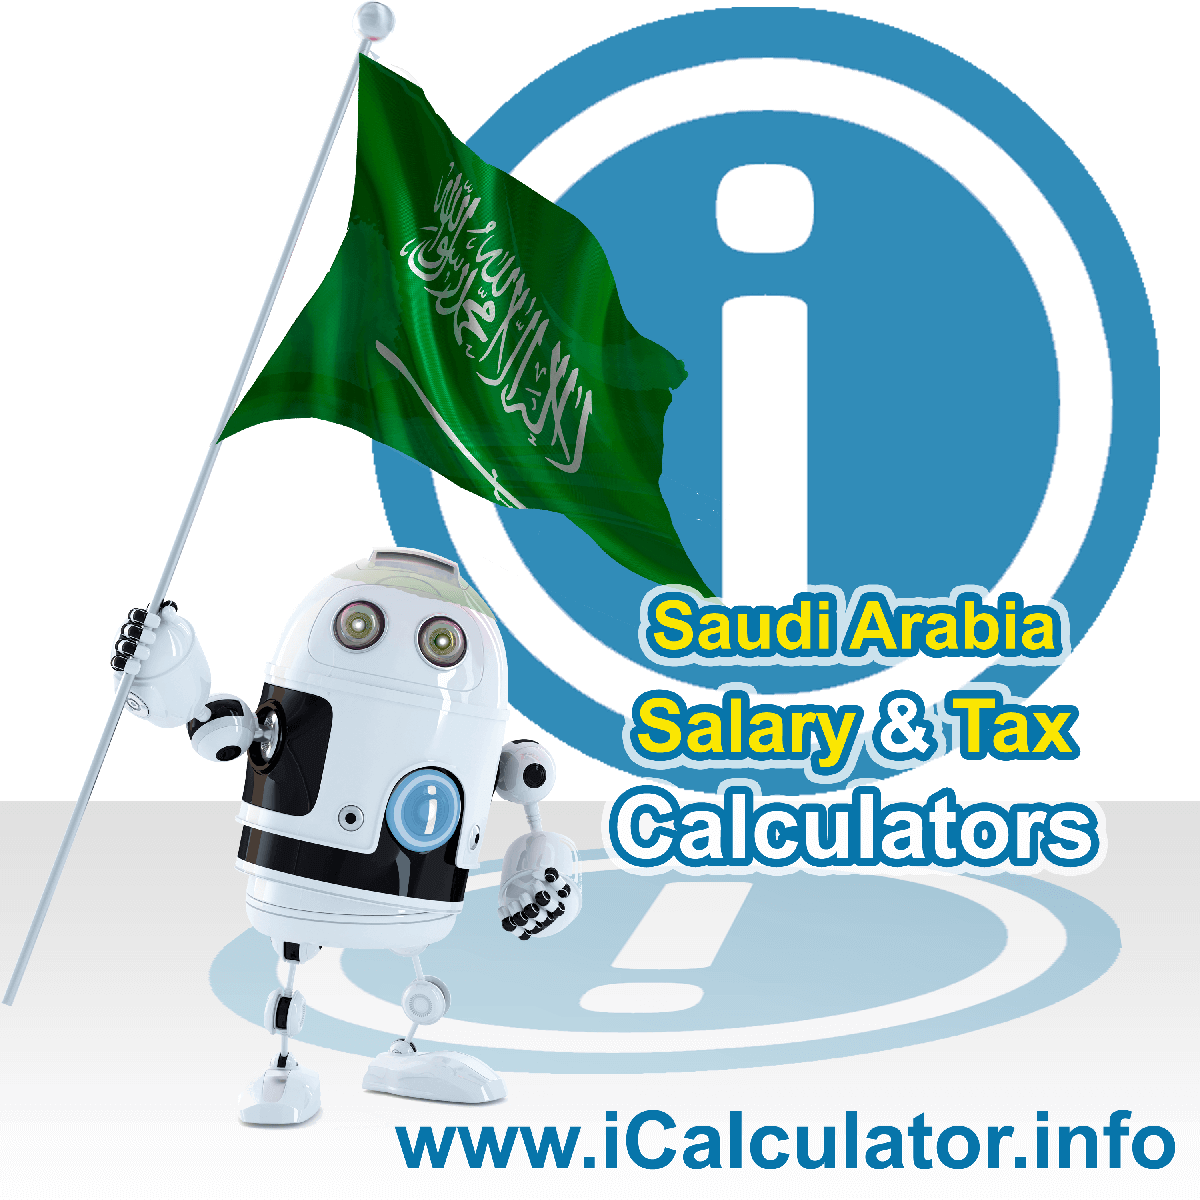 Saudi Arabia Wage Calculator. This image shows the Saudi Arabia flag and information relating to the tax formula for the Saudi Arabia Tax Calculator